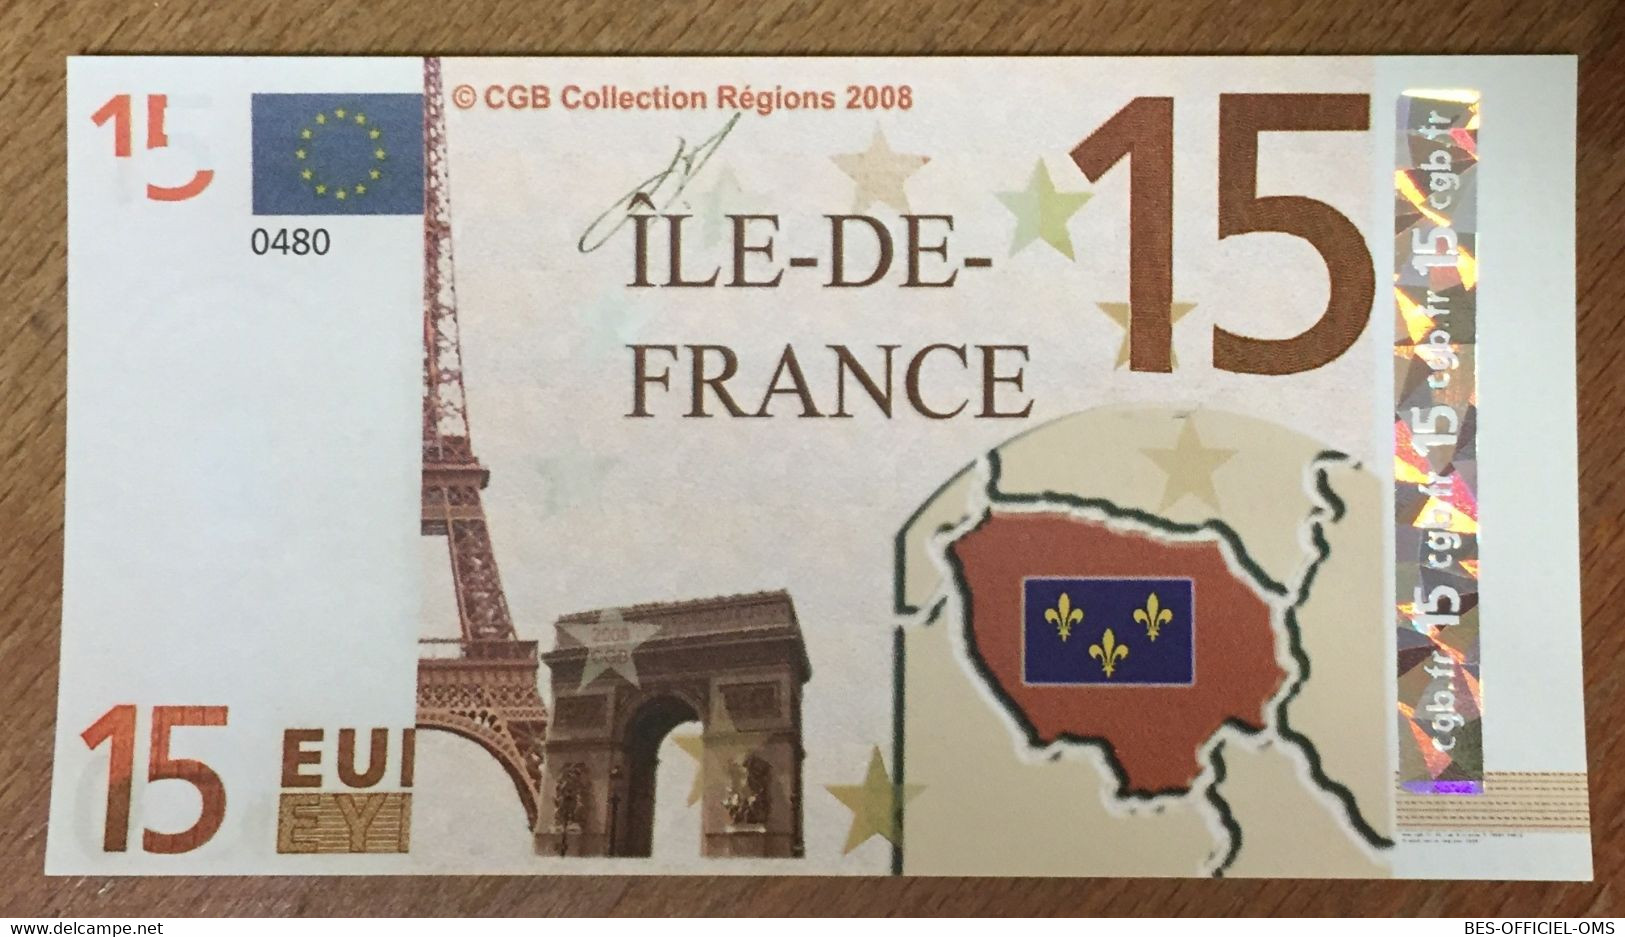 BILLET 15 EURO SOUVENIR ÎLE DE FRANCE 2008 EURO SCHEIN PAPER MONEY BANKNOTE PAPER LOCAL CURRENCY - Privatentwürfe